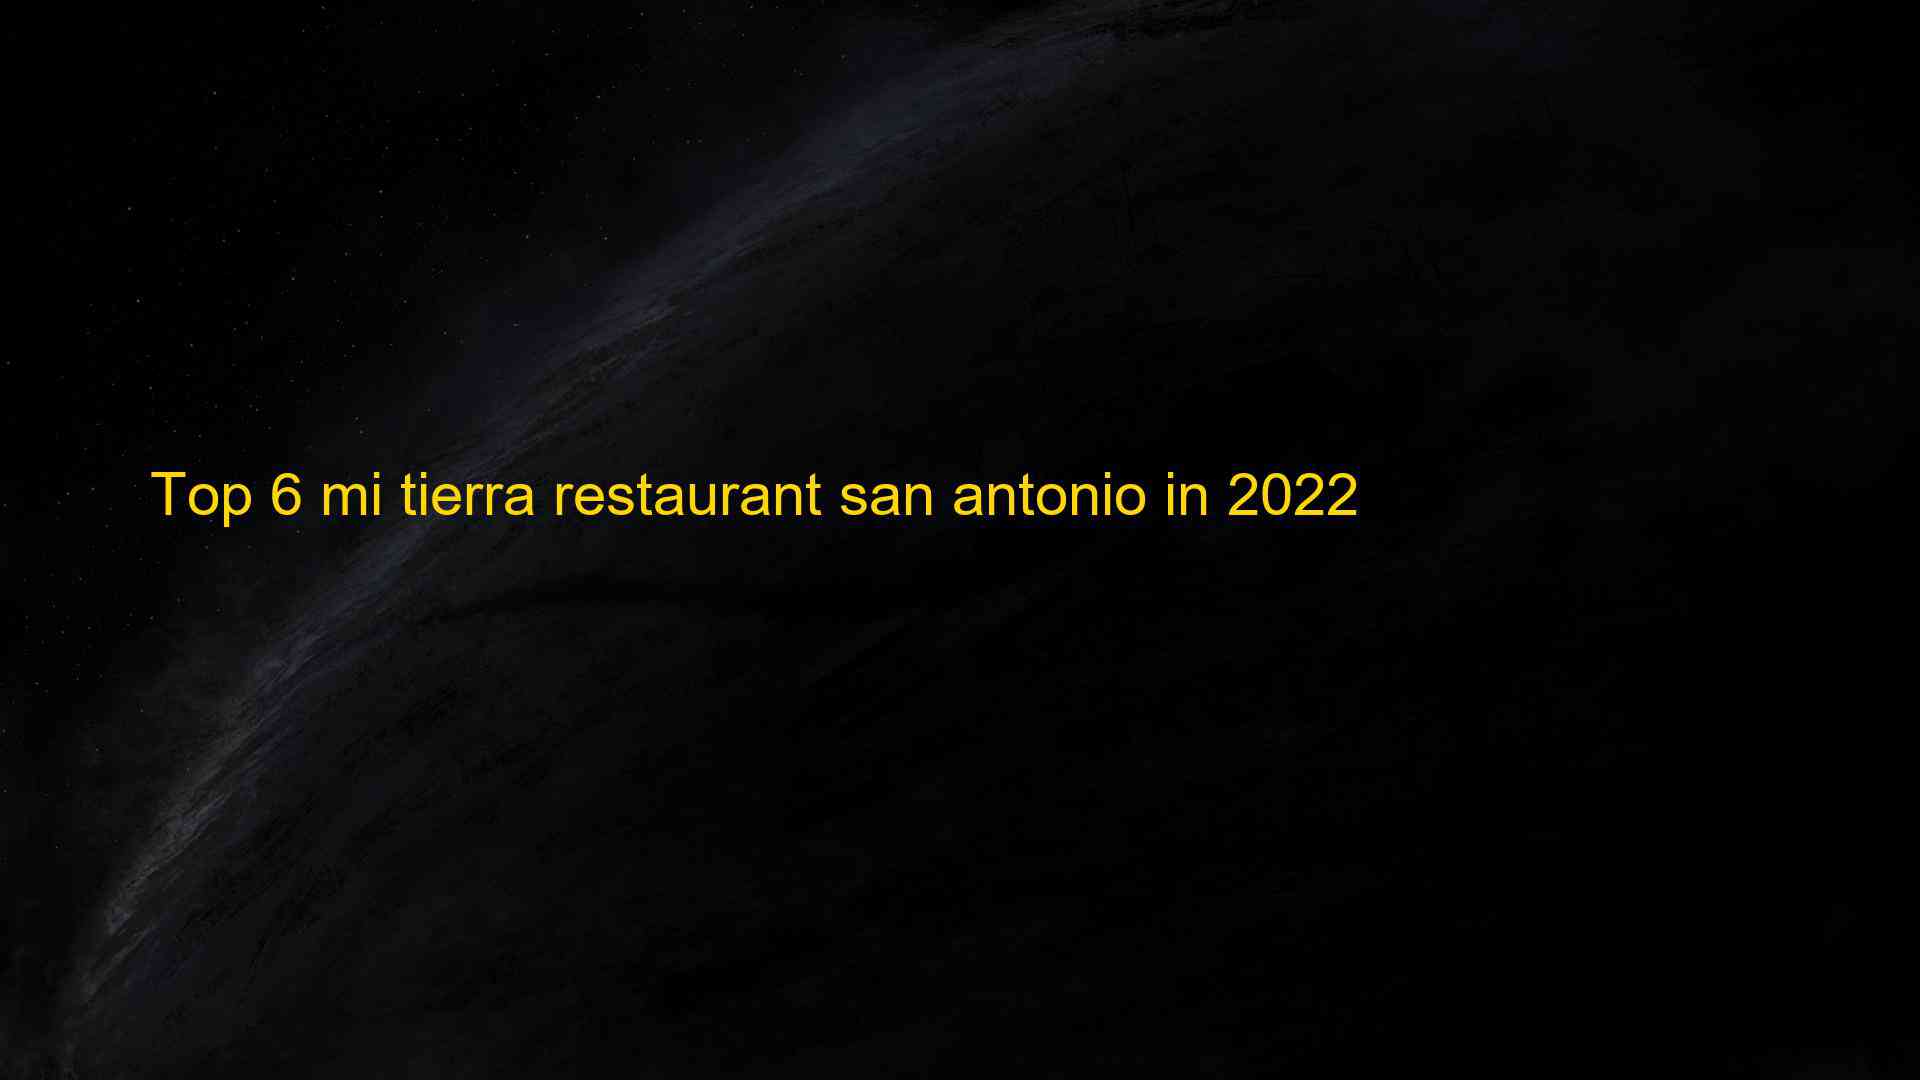 Top 6 mi tierra restaurant san antonio in 2022 1663205181